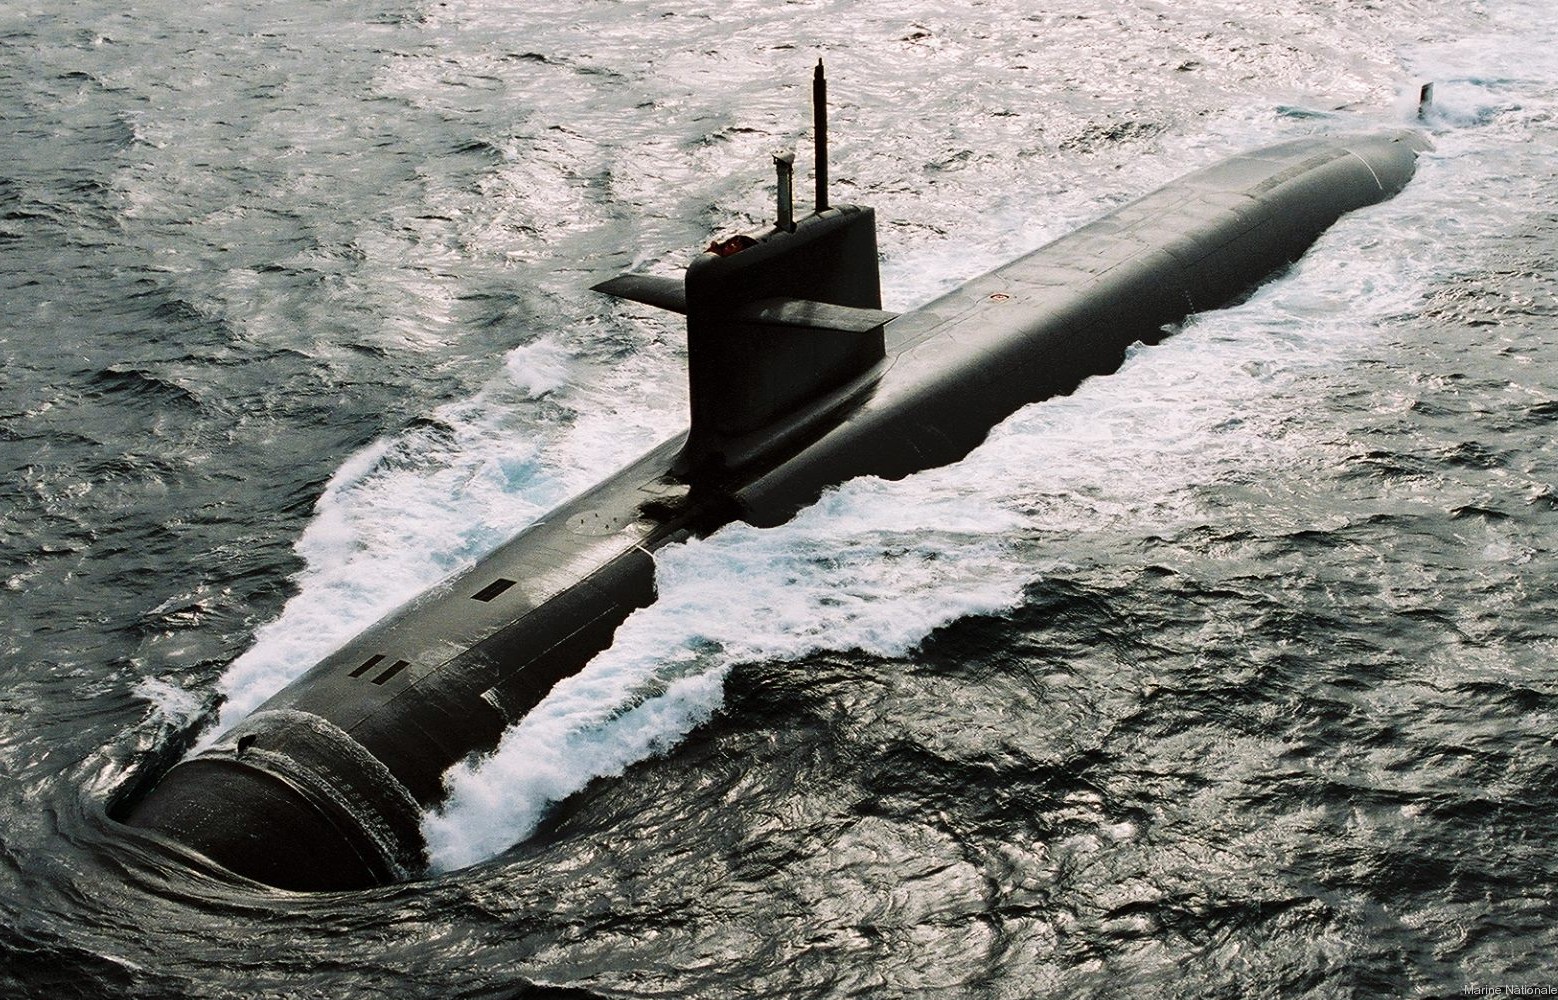 le triomphant class ballistic missile submarine ssbn snle french navy marine nationale temeraire vigilant terrible 03